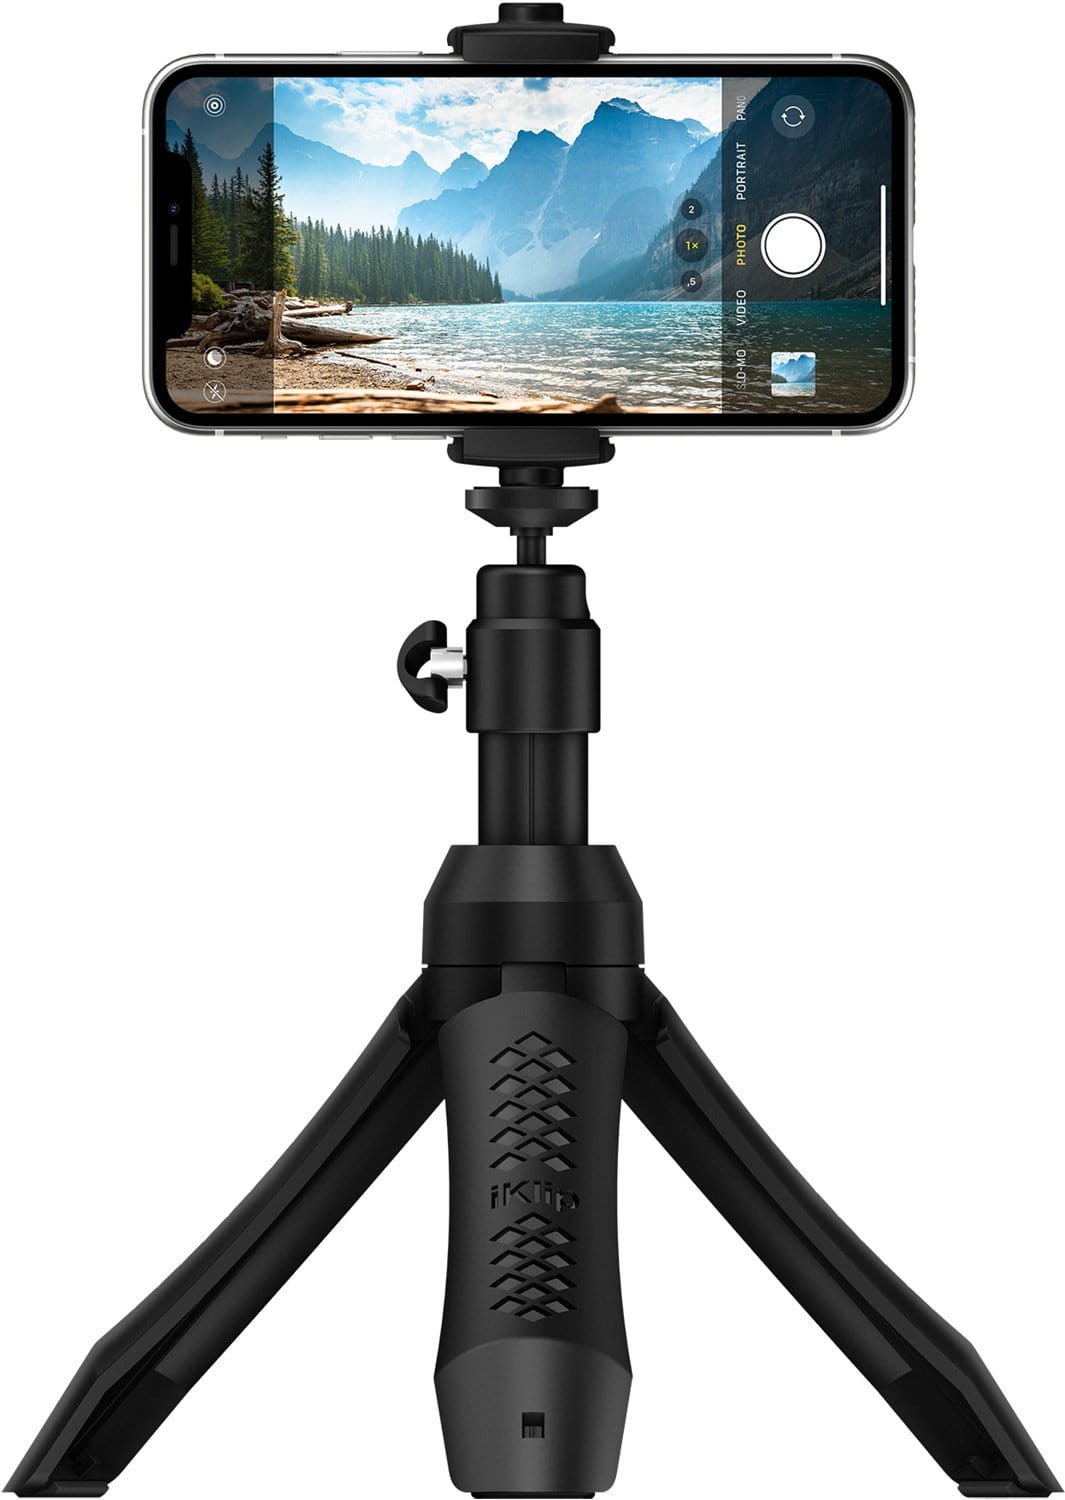 Ik Multimedia Iklip Grip Pro Phone Camera Grip - PSSL ProSound and Stage Lighting